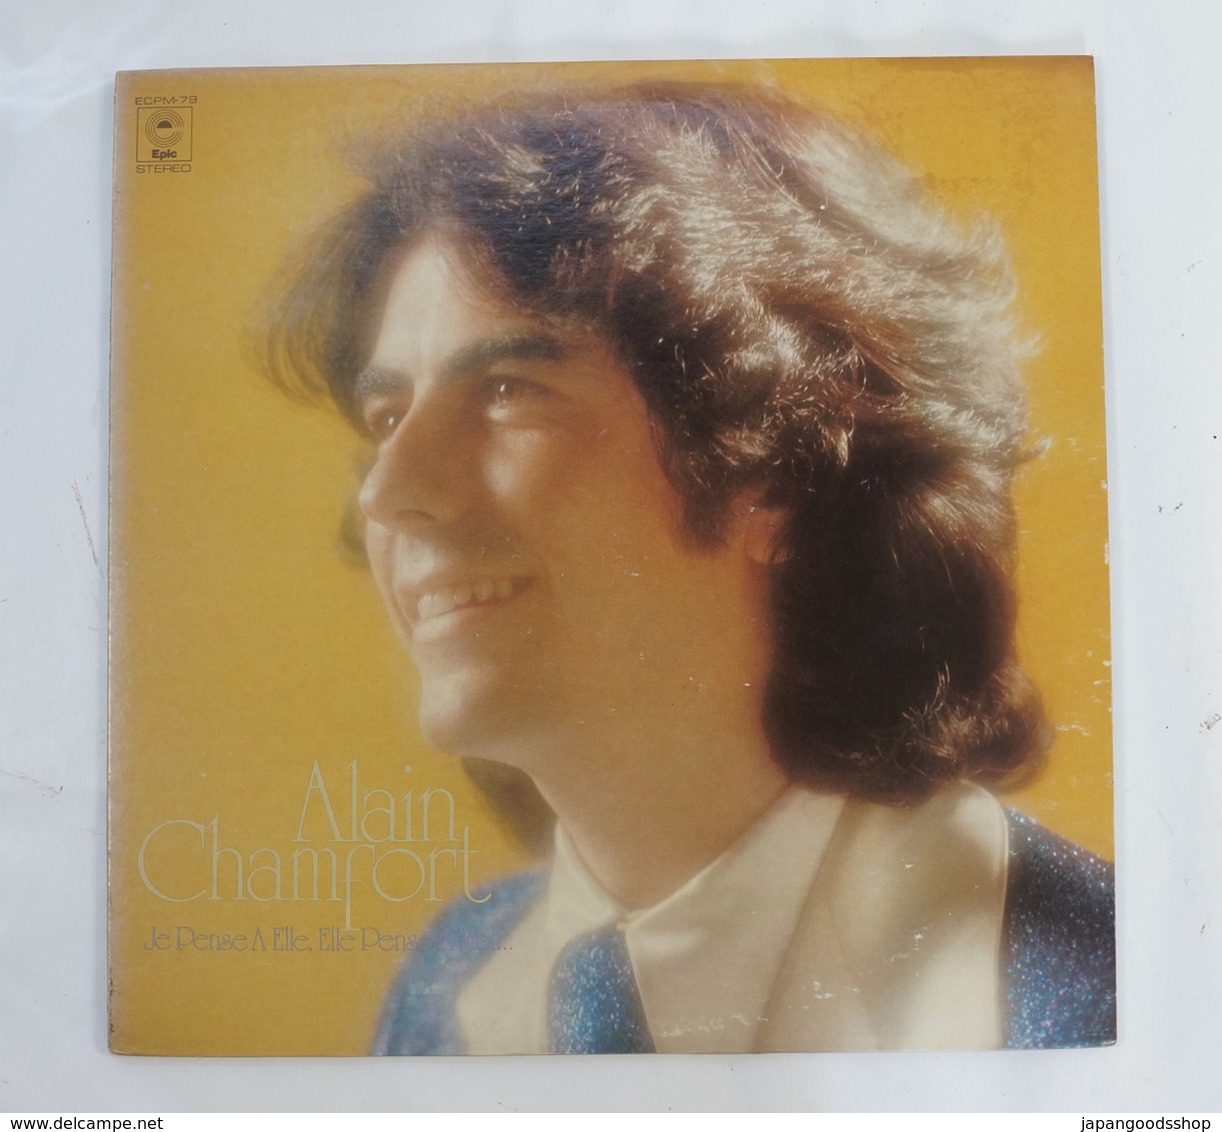 Vinyl LP:  Alain Chamfort " Je Pense à Elle, Elle Pense à Moi "  Epic ECPM-79 JPN - Other - French Music